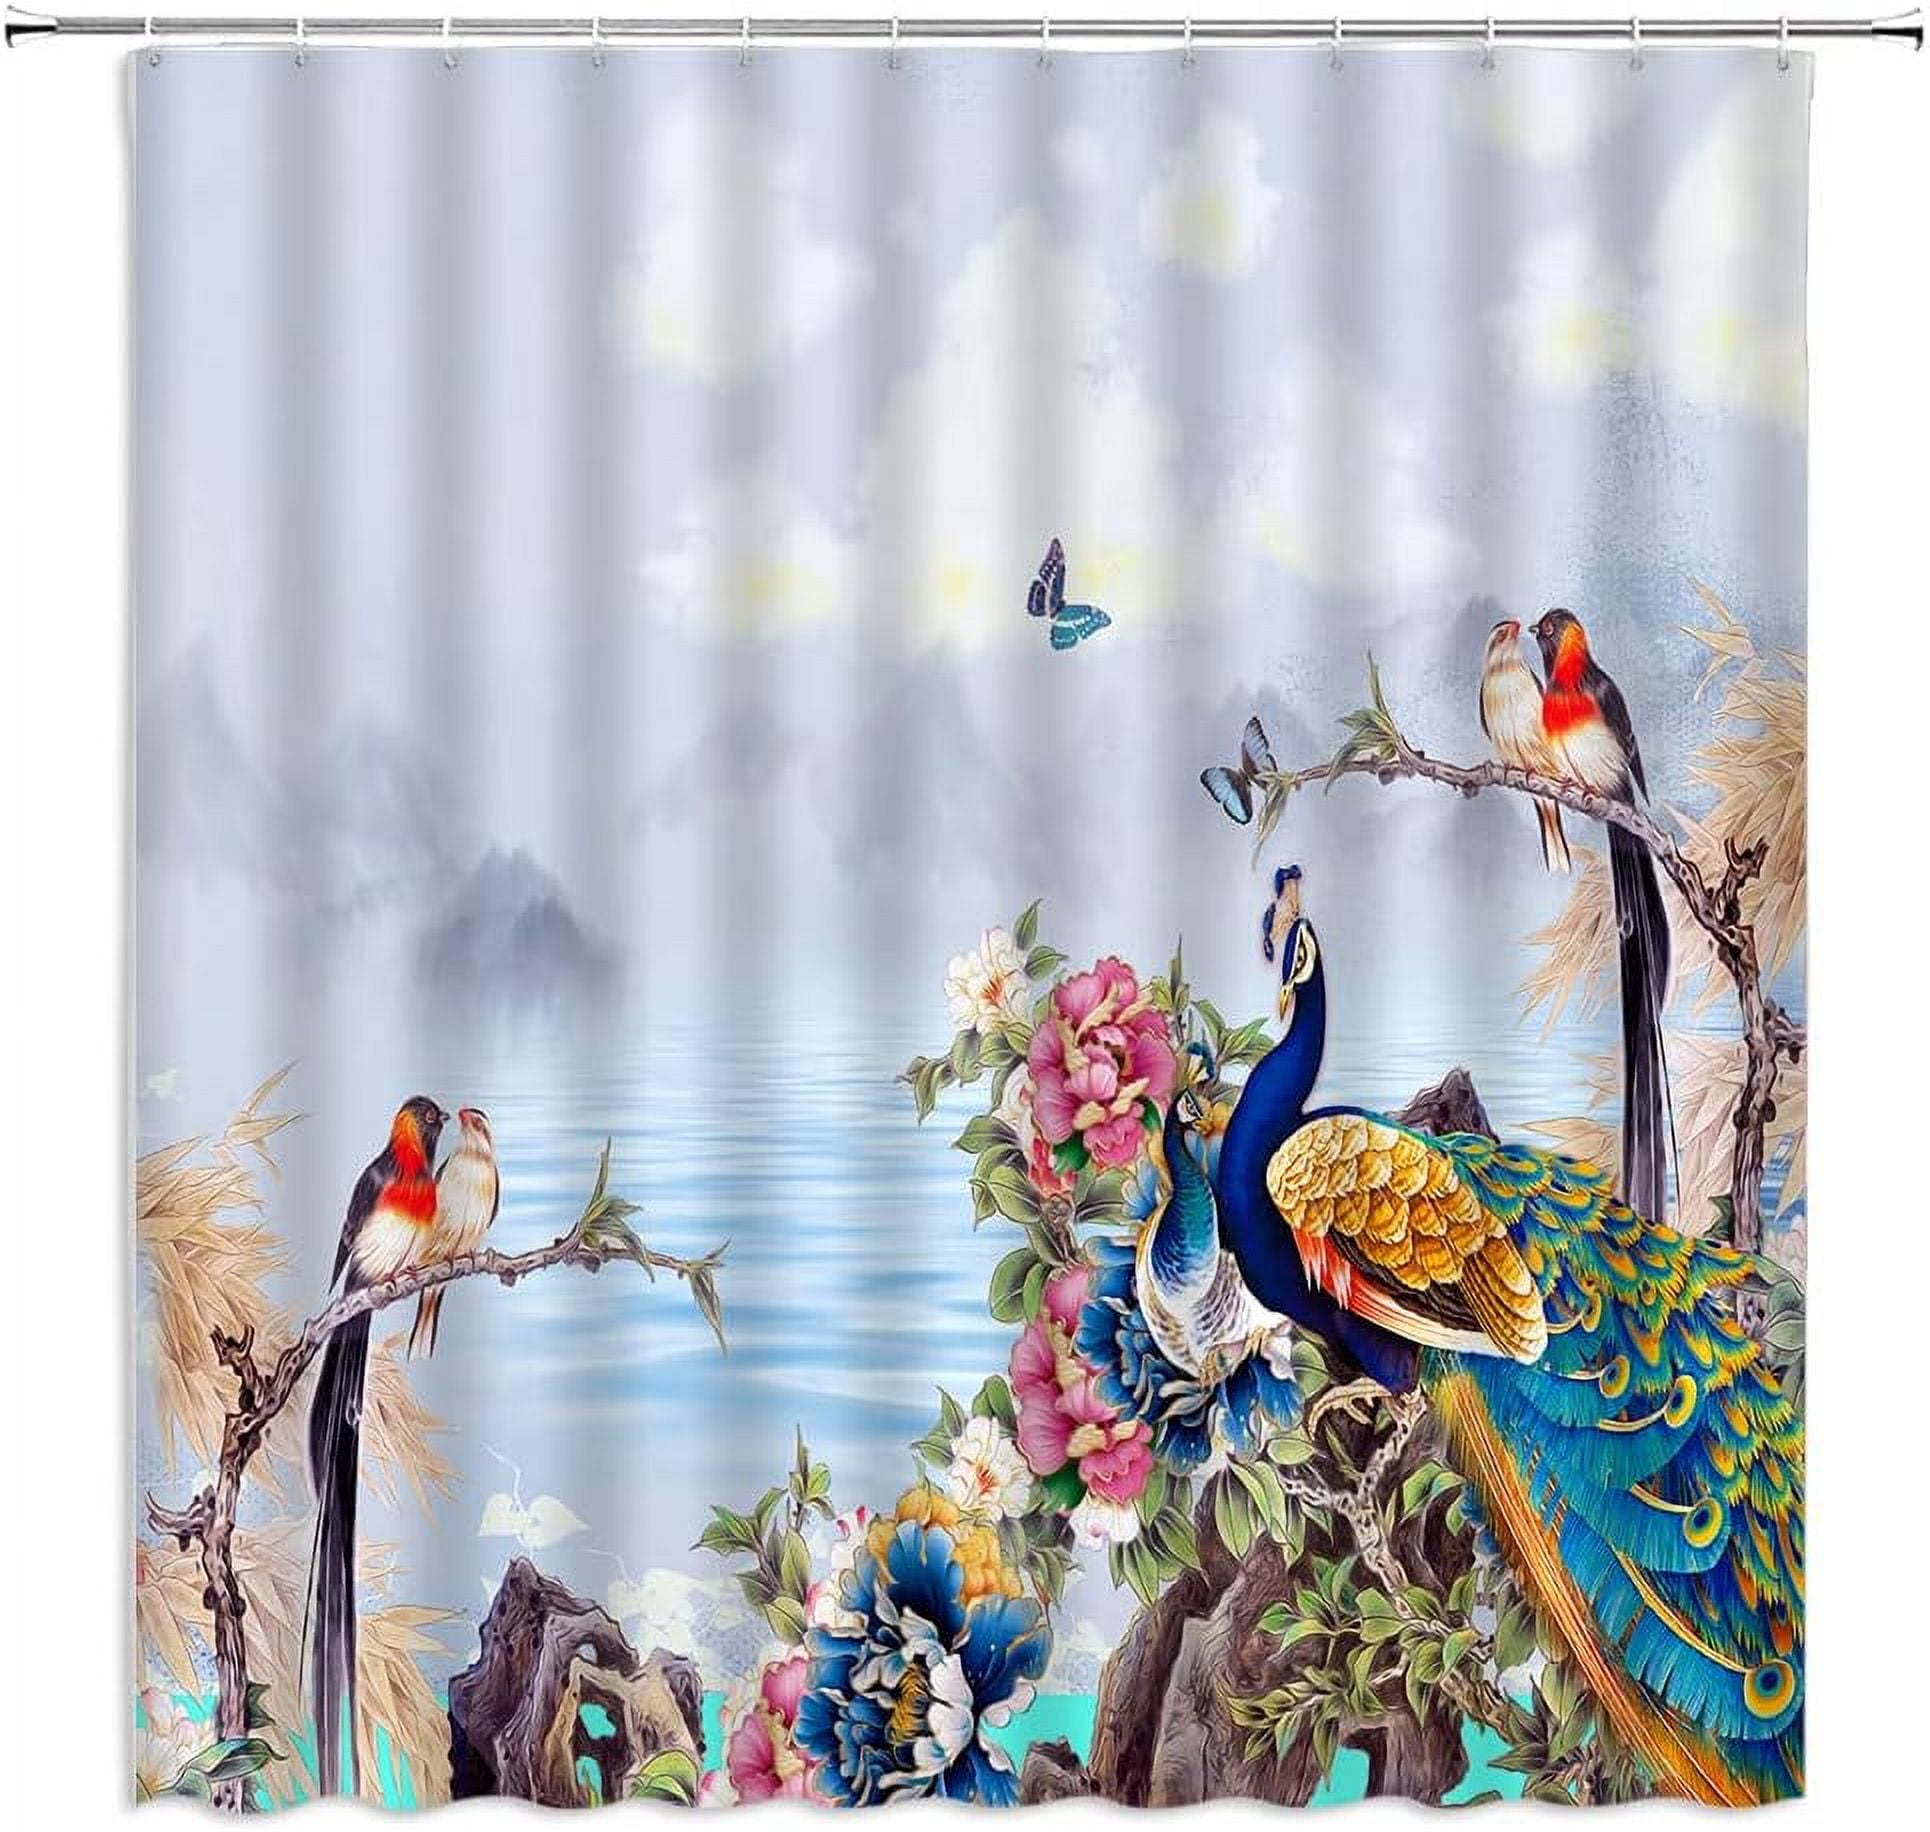 JOOCAR Flower Hummingbird Shower Curtain Floral Bird Purple Wisteria Leaves Fabric  Bathroom Decor Curtains with Hook 72x72 